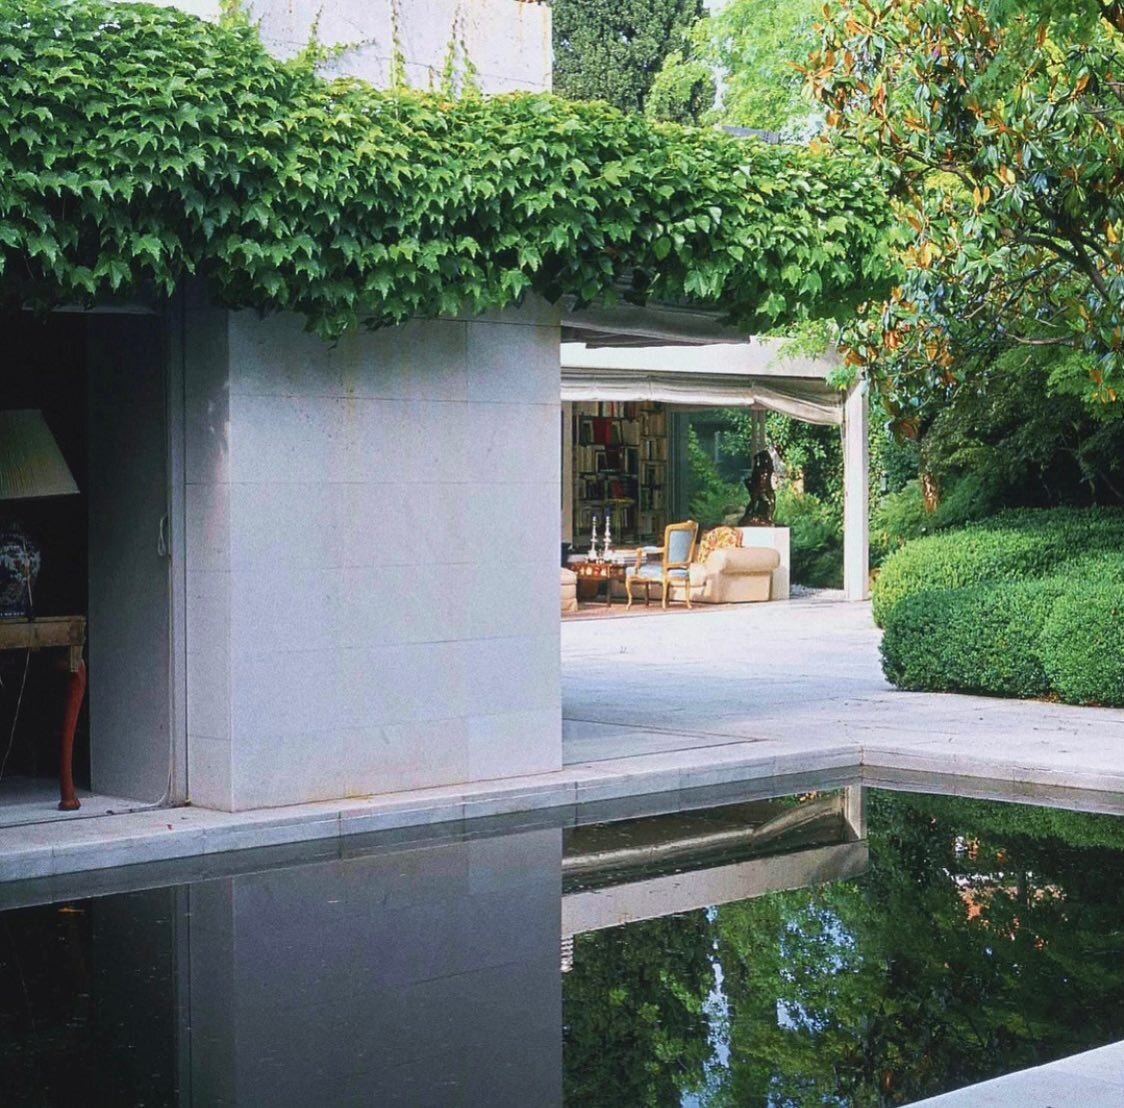 Garden in Aravaca, Madrid, Spain, 1981. 🦚
@carunchogardener | @monacellipress | Architect Richard Neutra
#moodboard #inspiredby